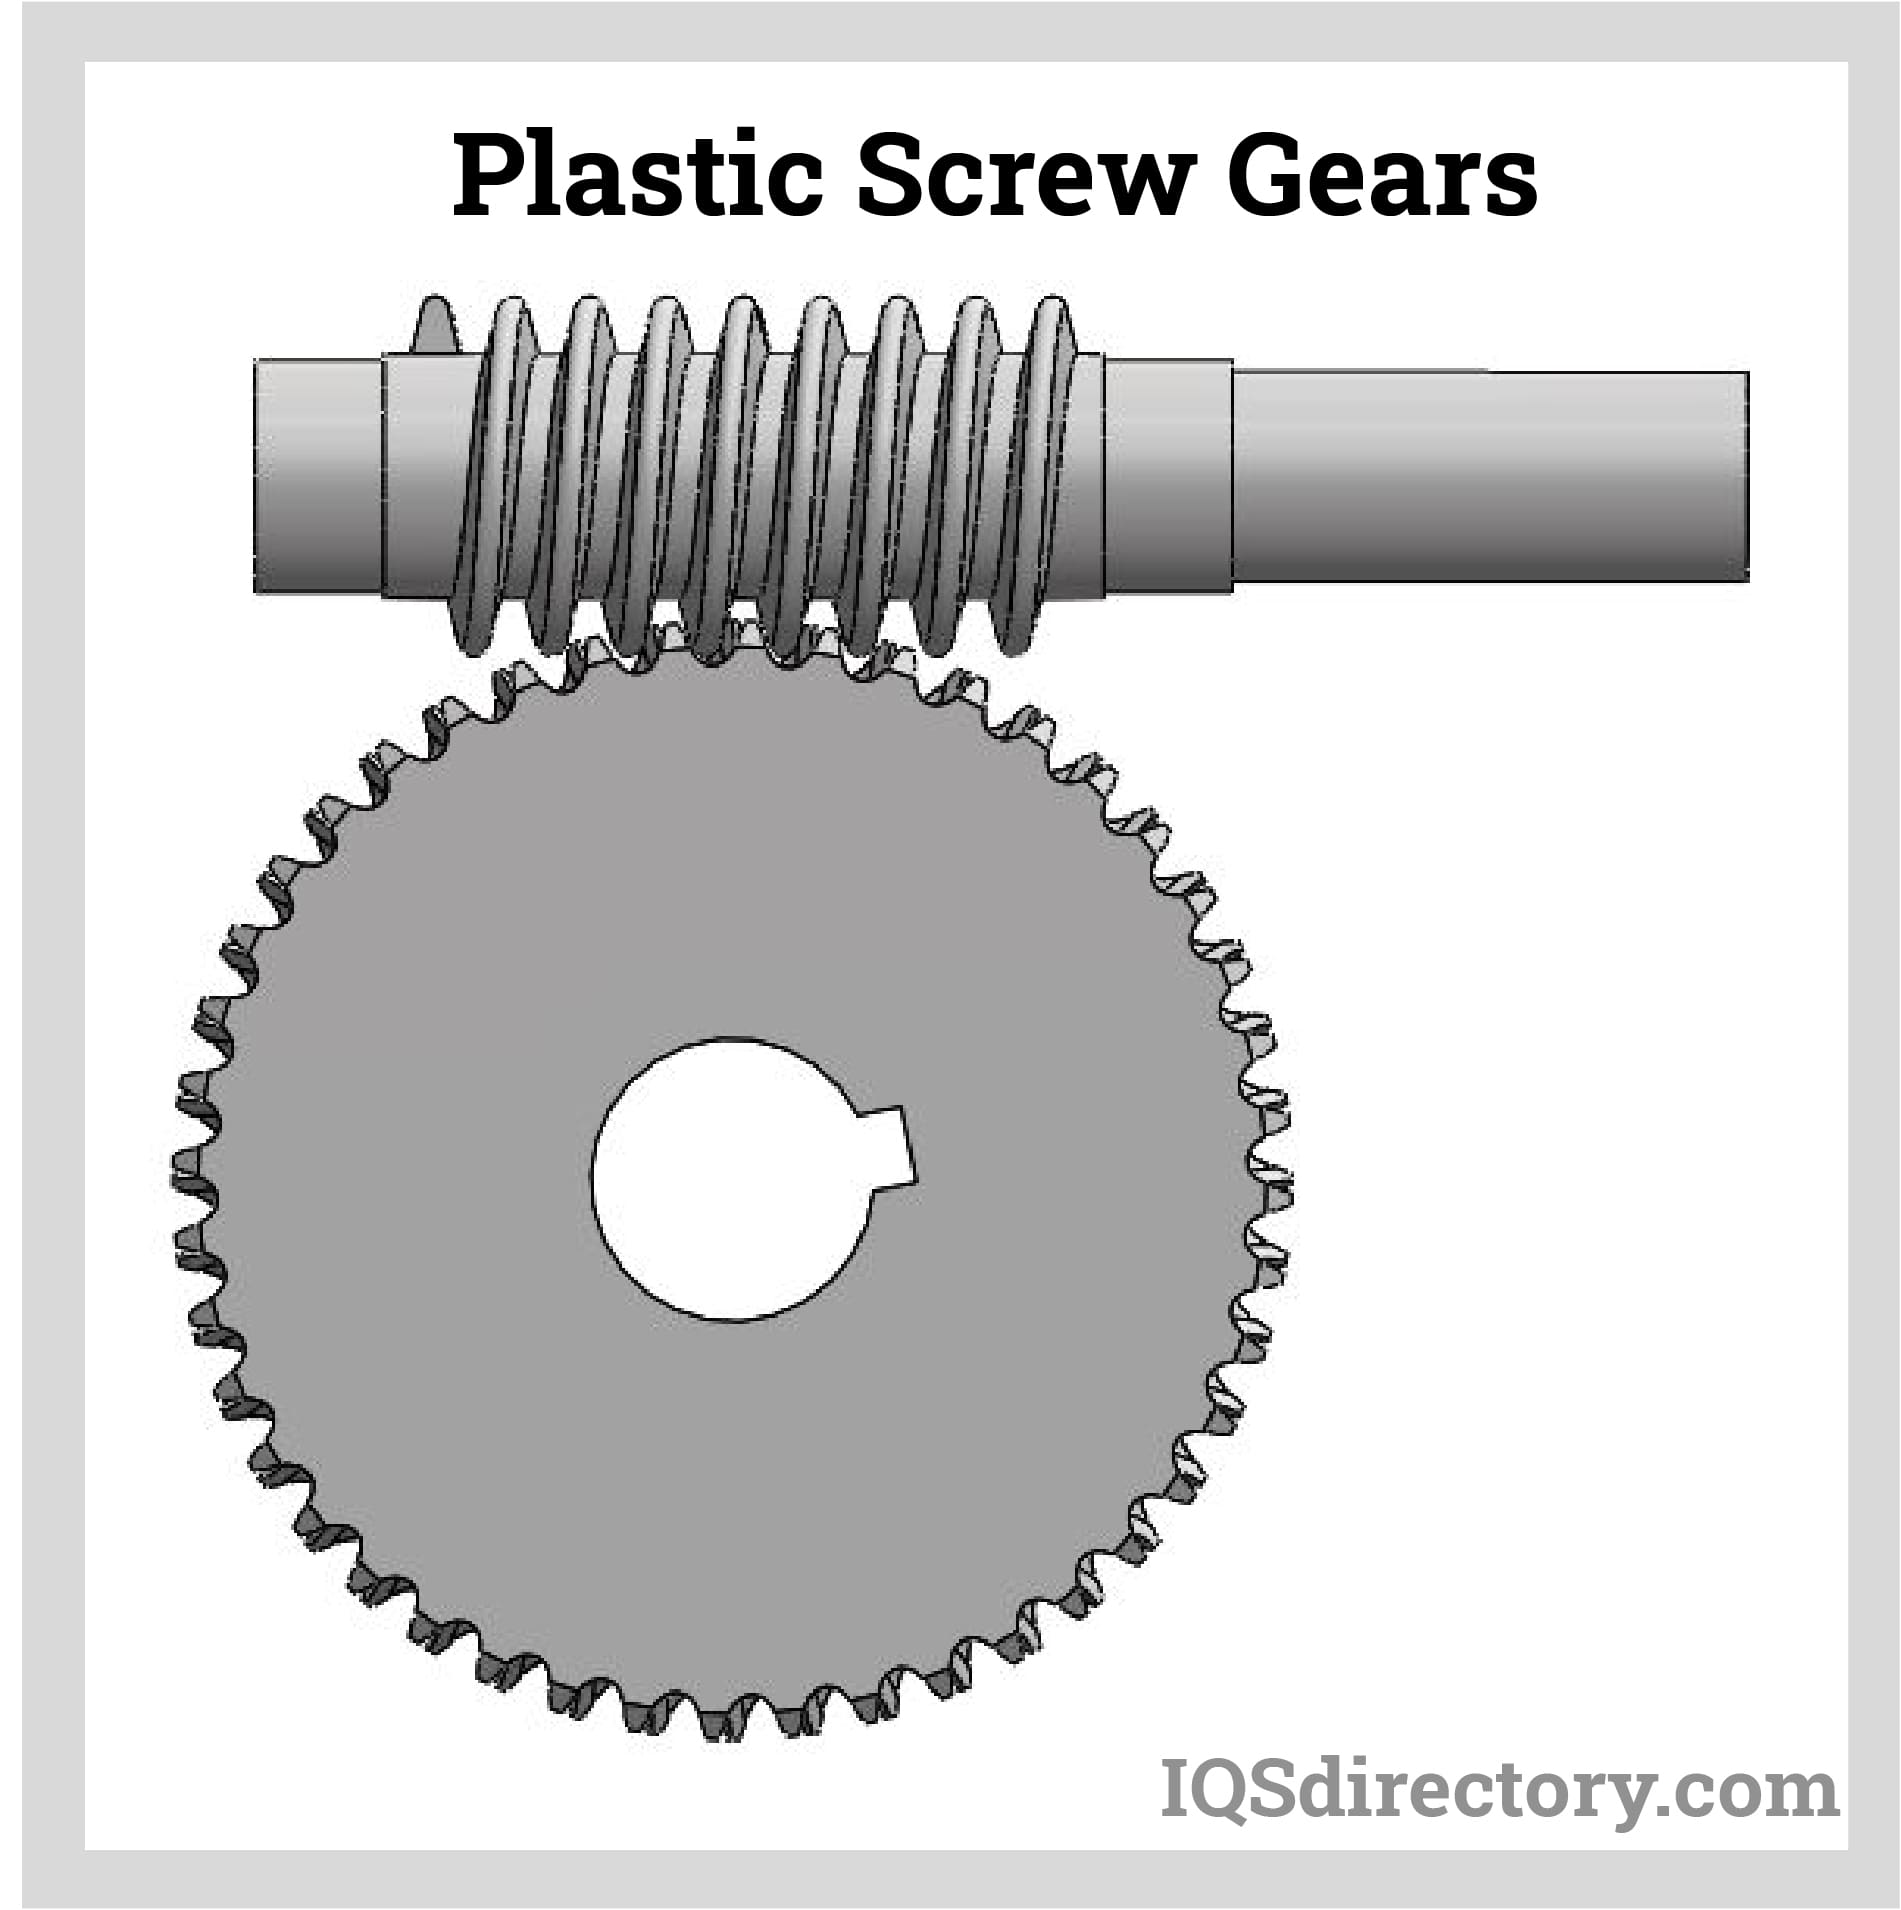 Plastic Screw Gears